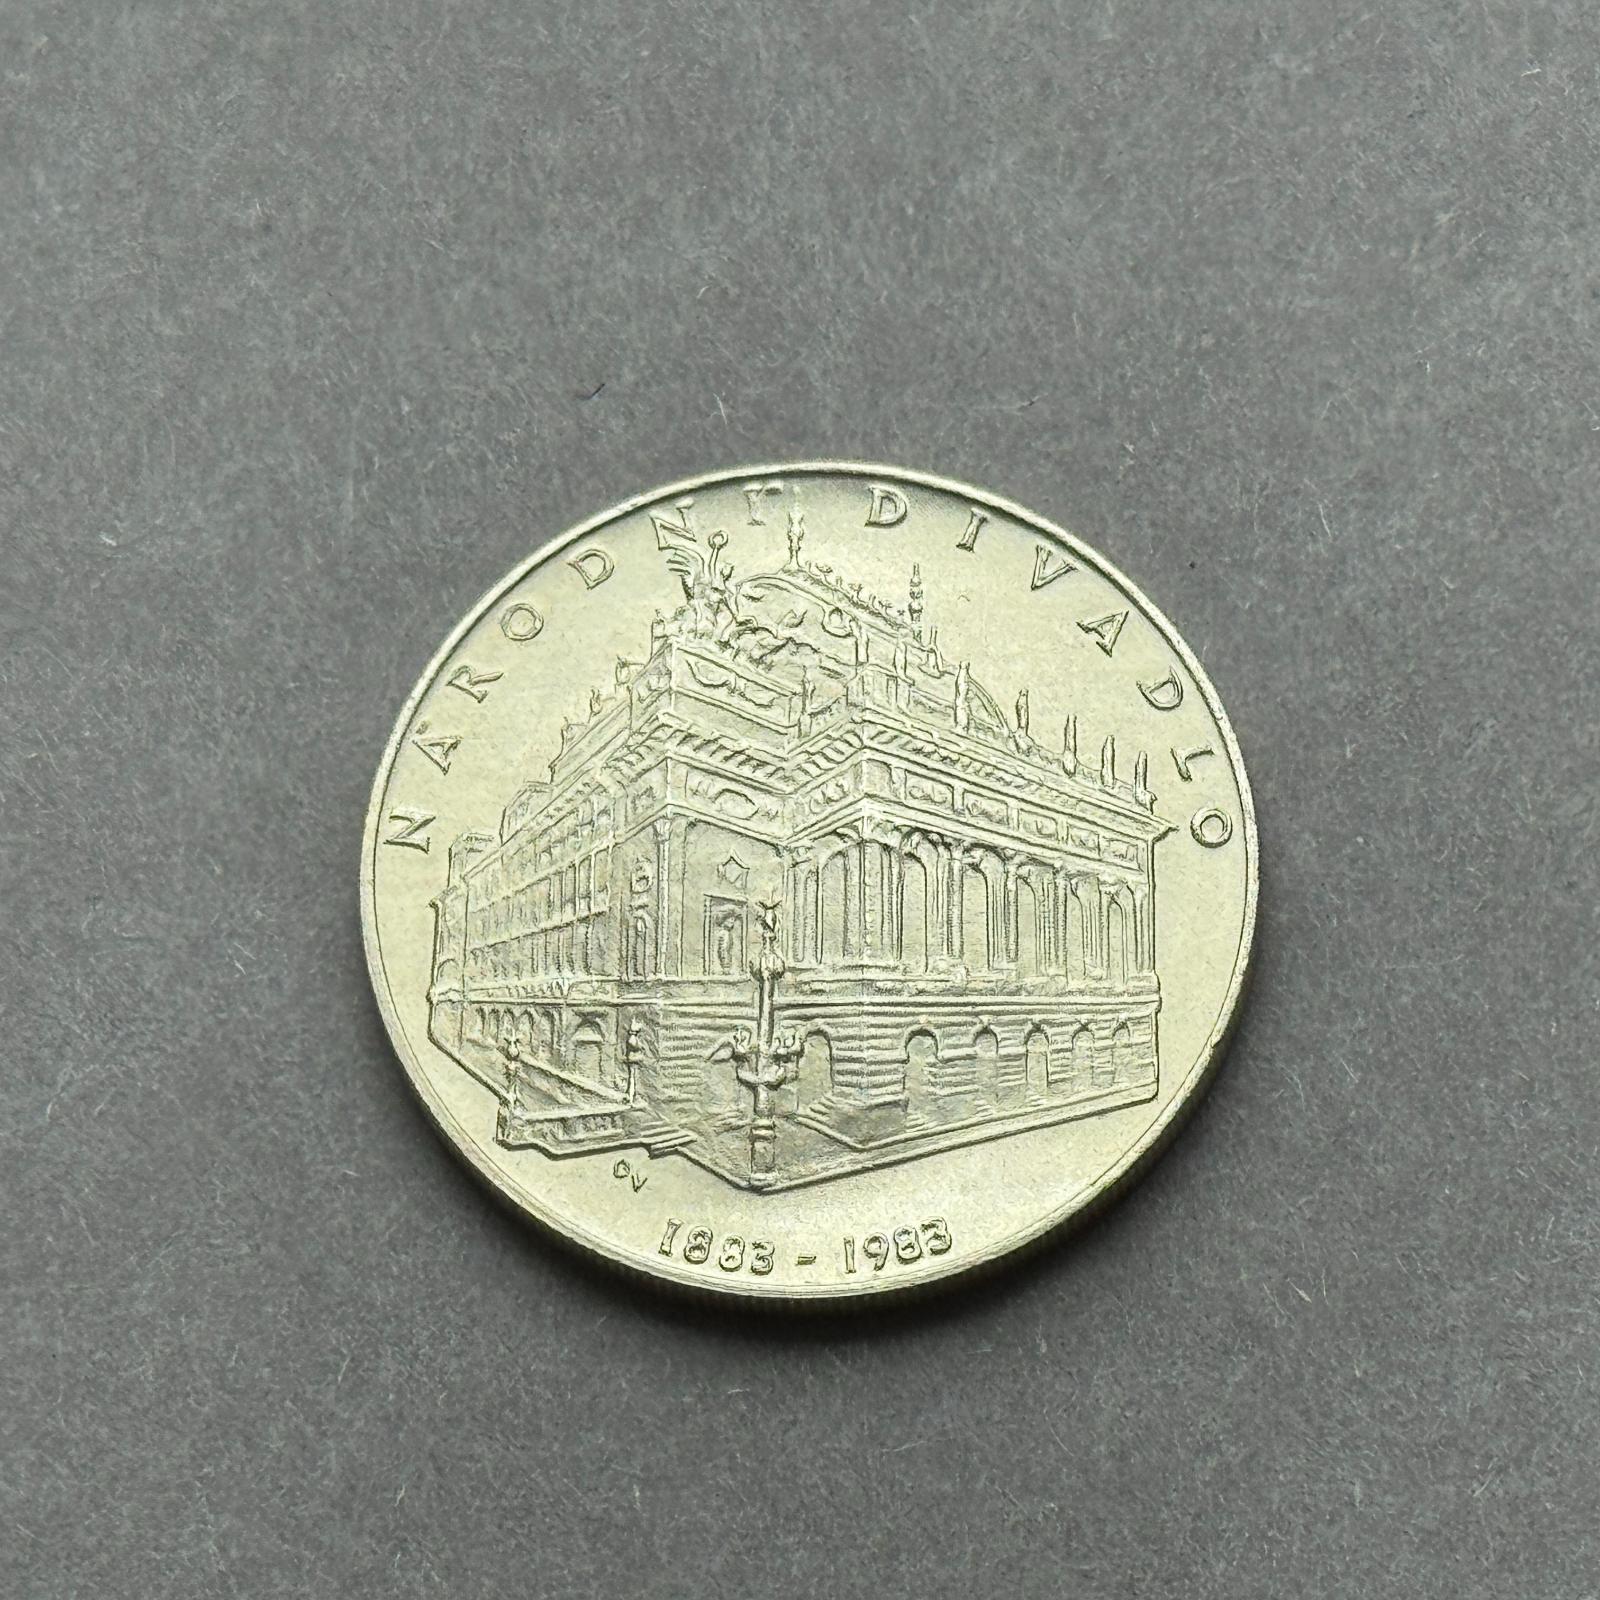 Strieborná minca , 100 Kčs Národné divadlo - S 240406/04 - Numizmatika